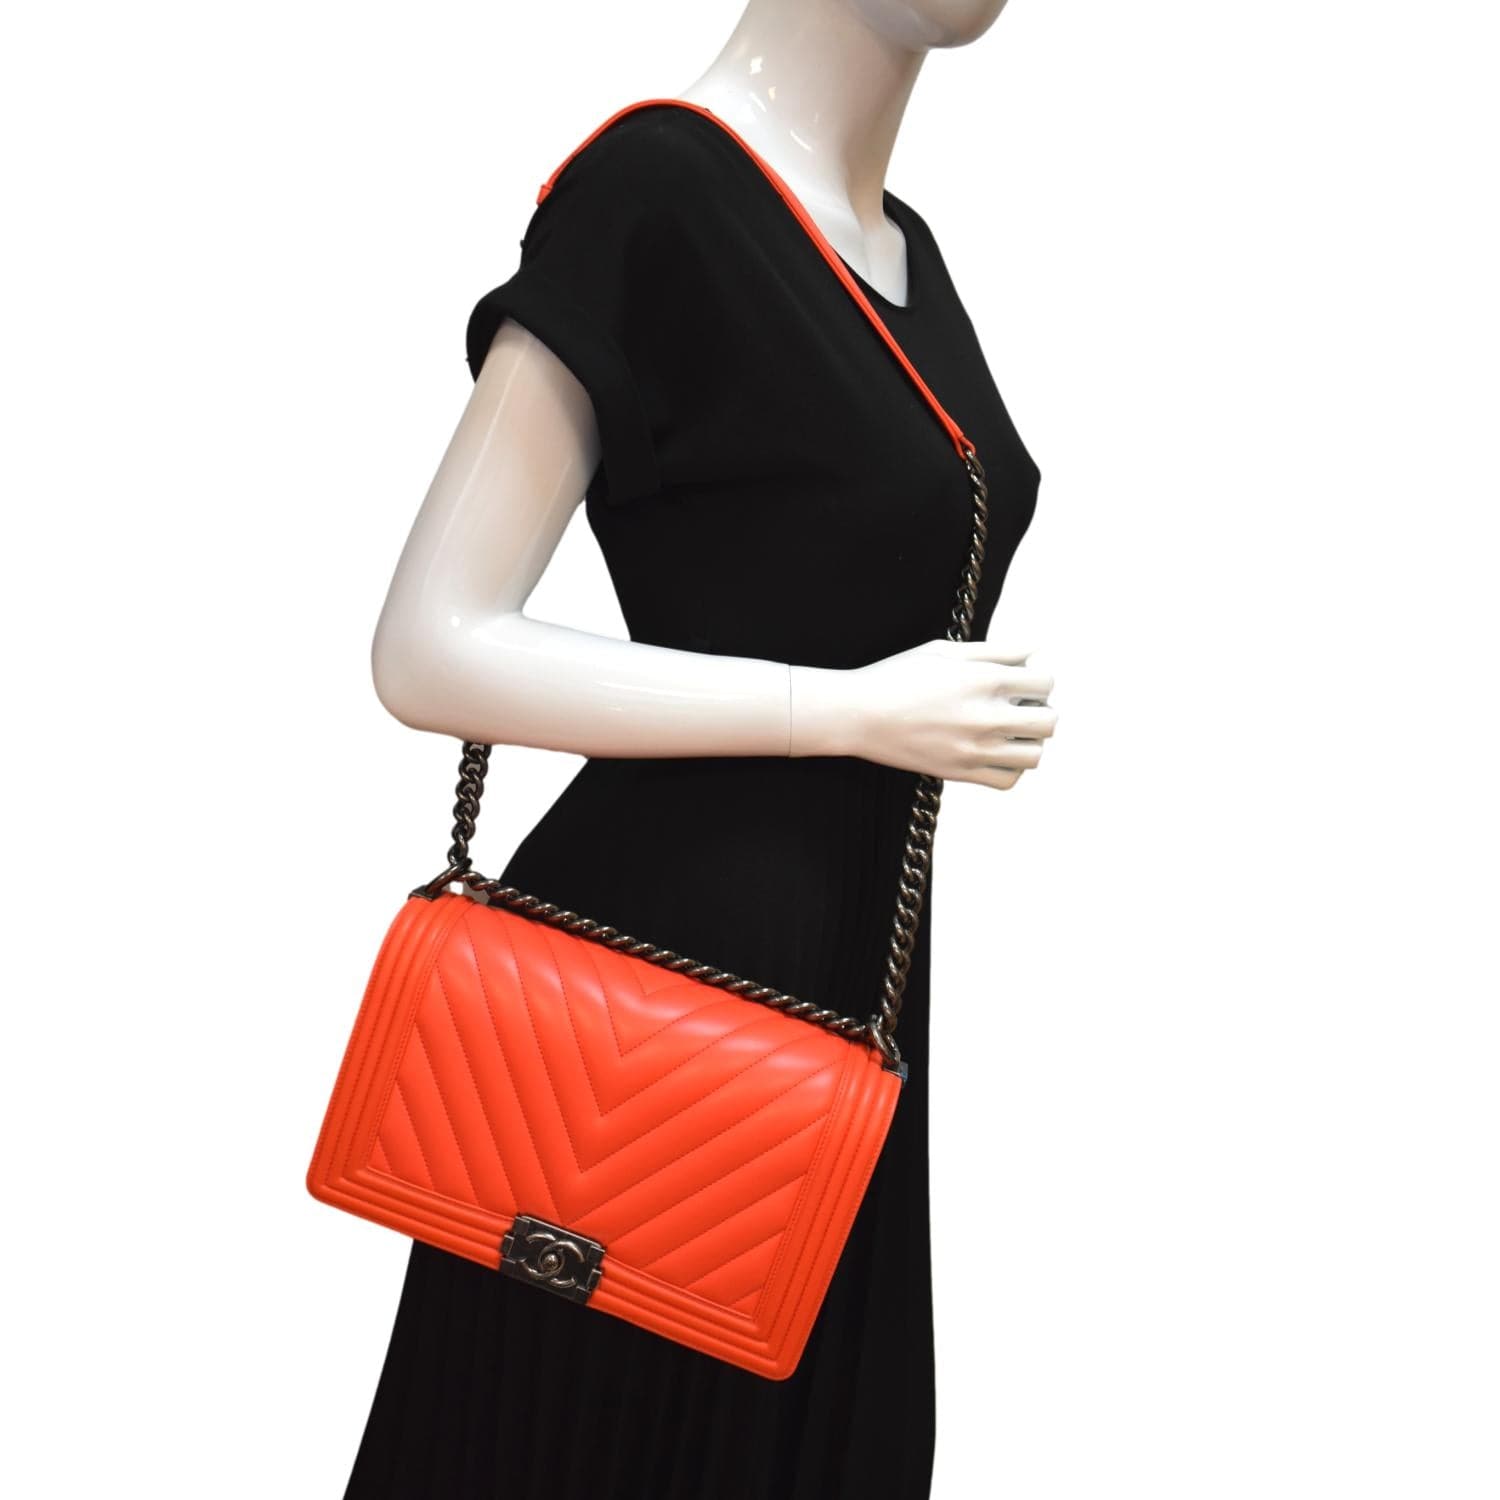 Chanel Medium Boy Flap Chevron Quilted Calfskin Shoulder Bag Red